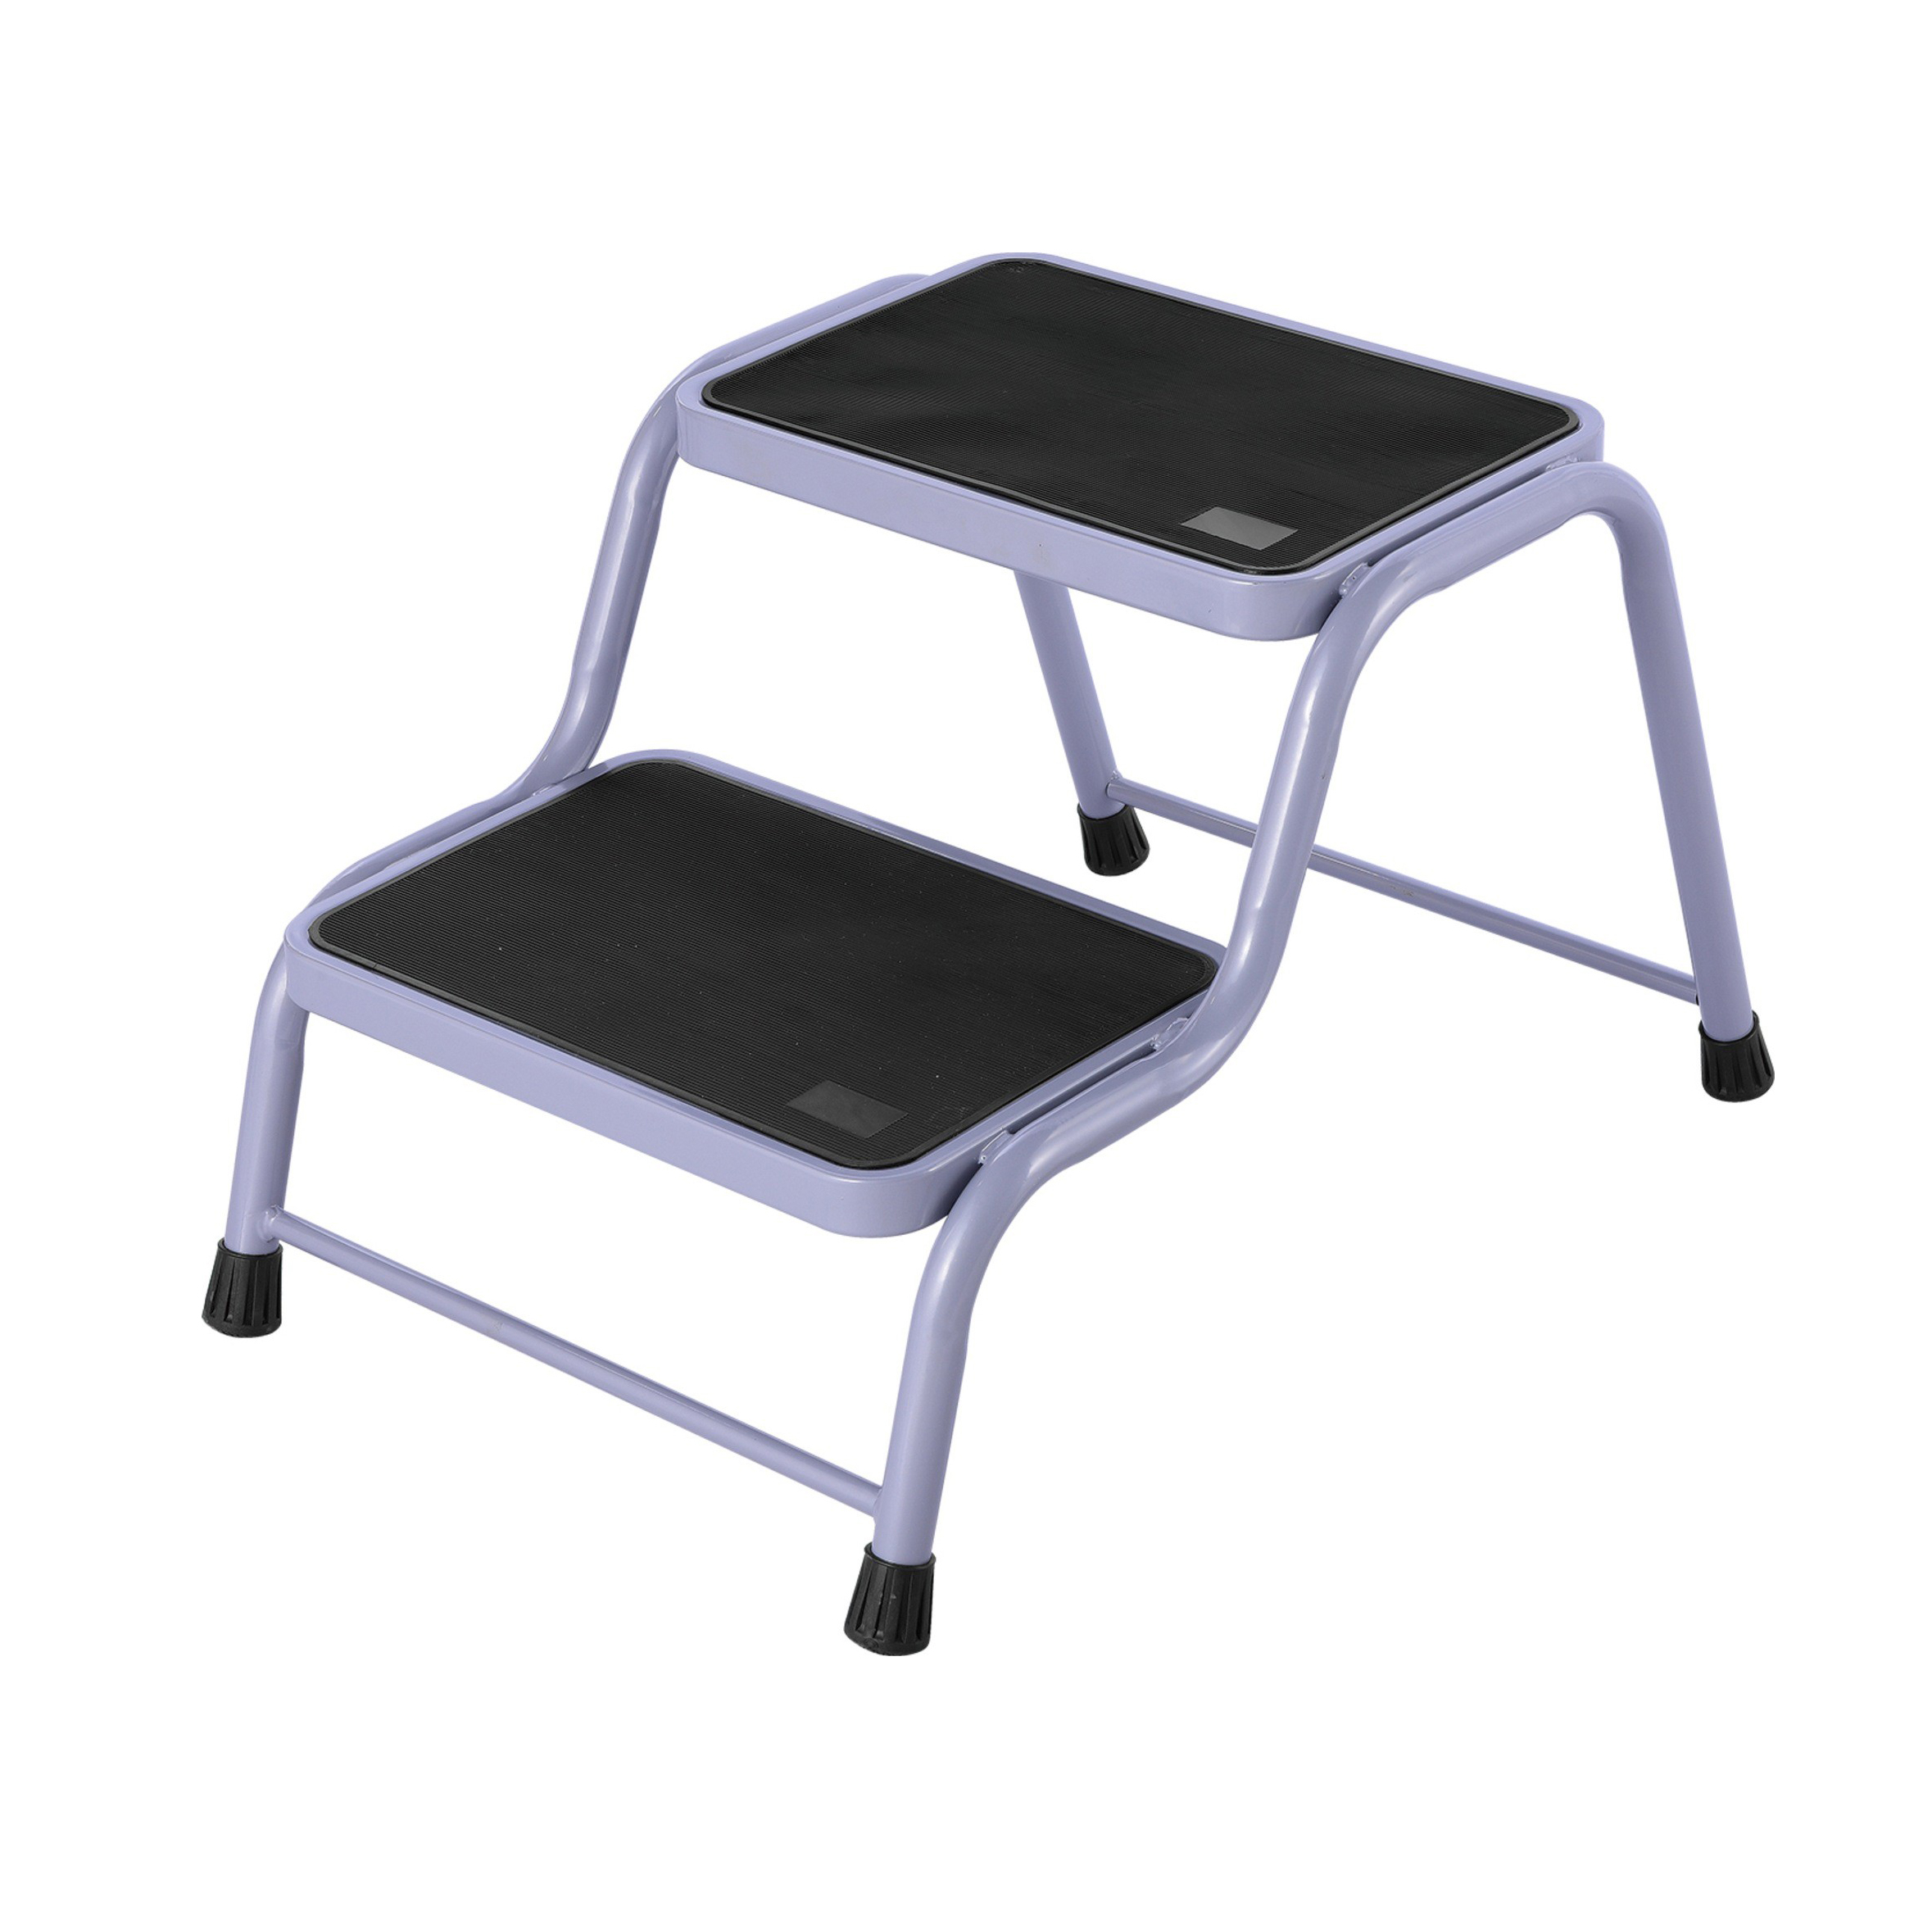 2 step steel stool ladder stair safe platform work stand hop up portable kick step stool (2)